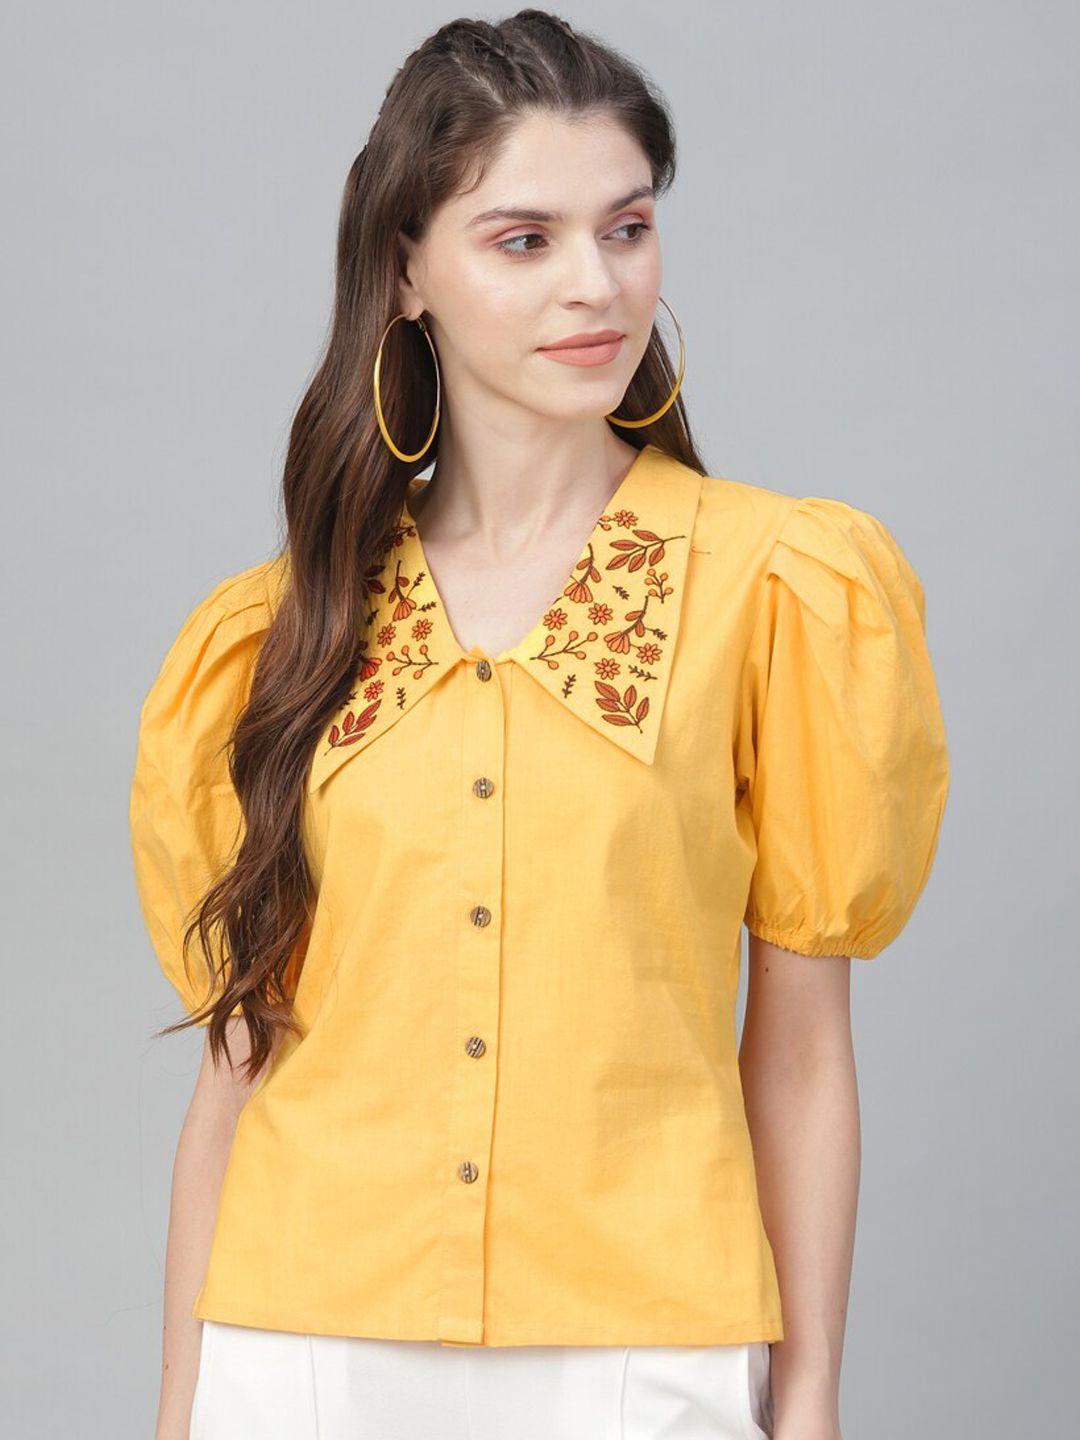 athena-women-yellow-puff-sleeves-shirt-style-top